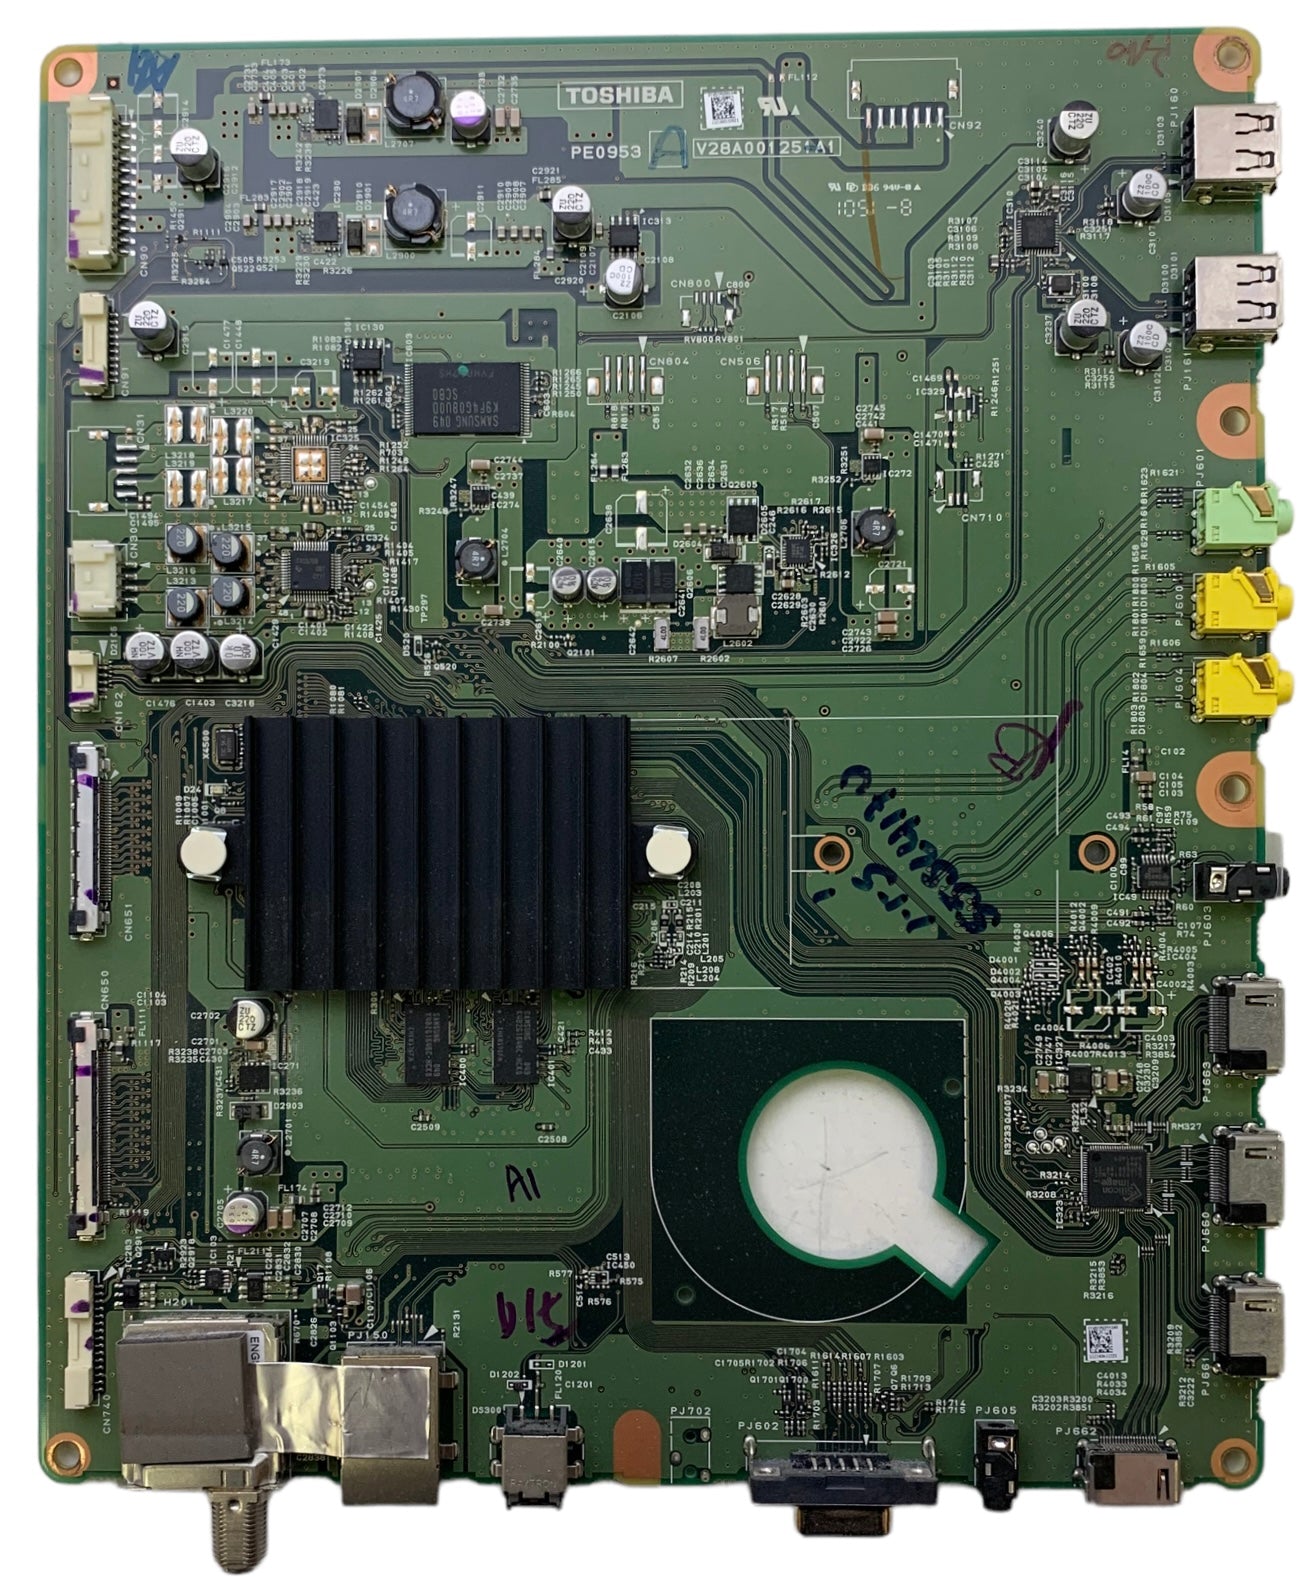 Toshiba 75022781 (PE0953A, V28A001251A1) Main Board